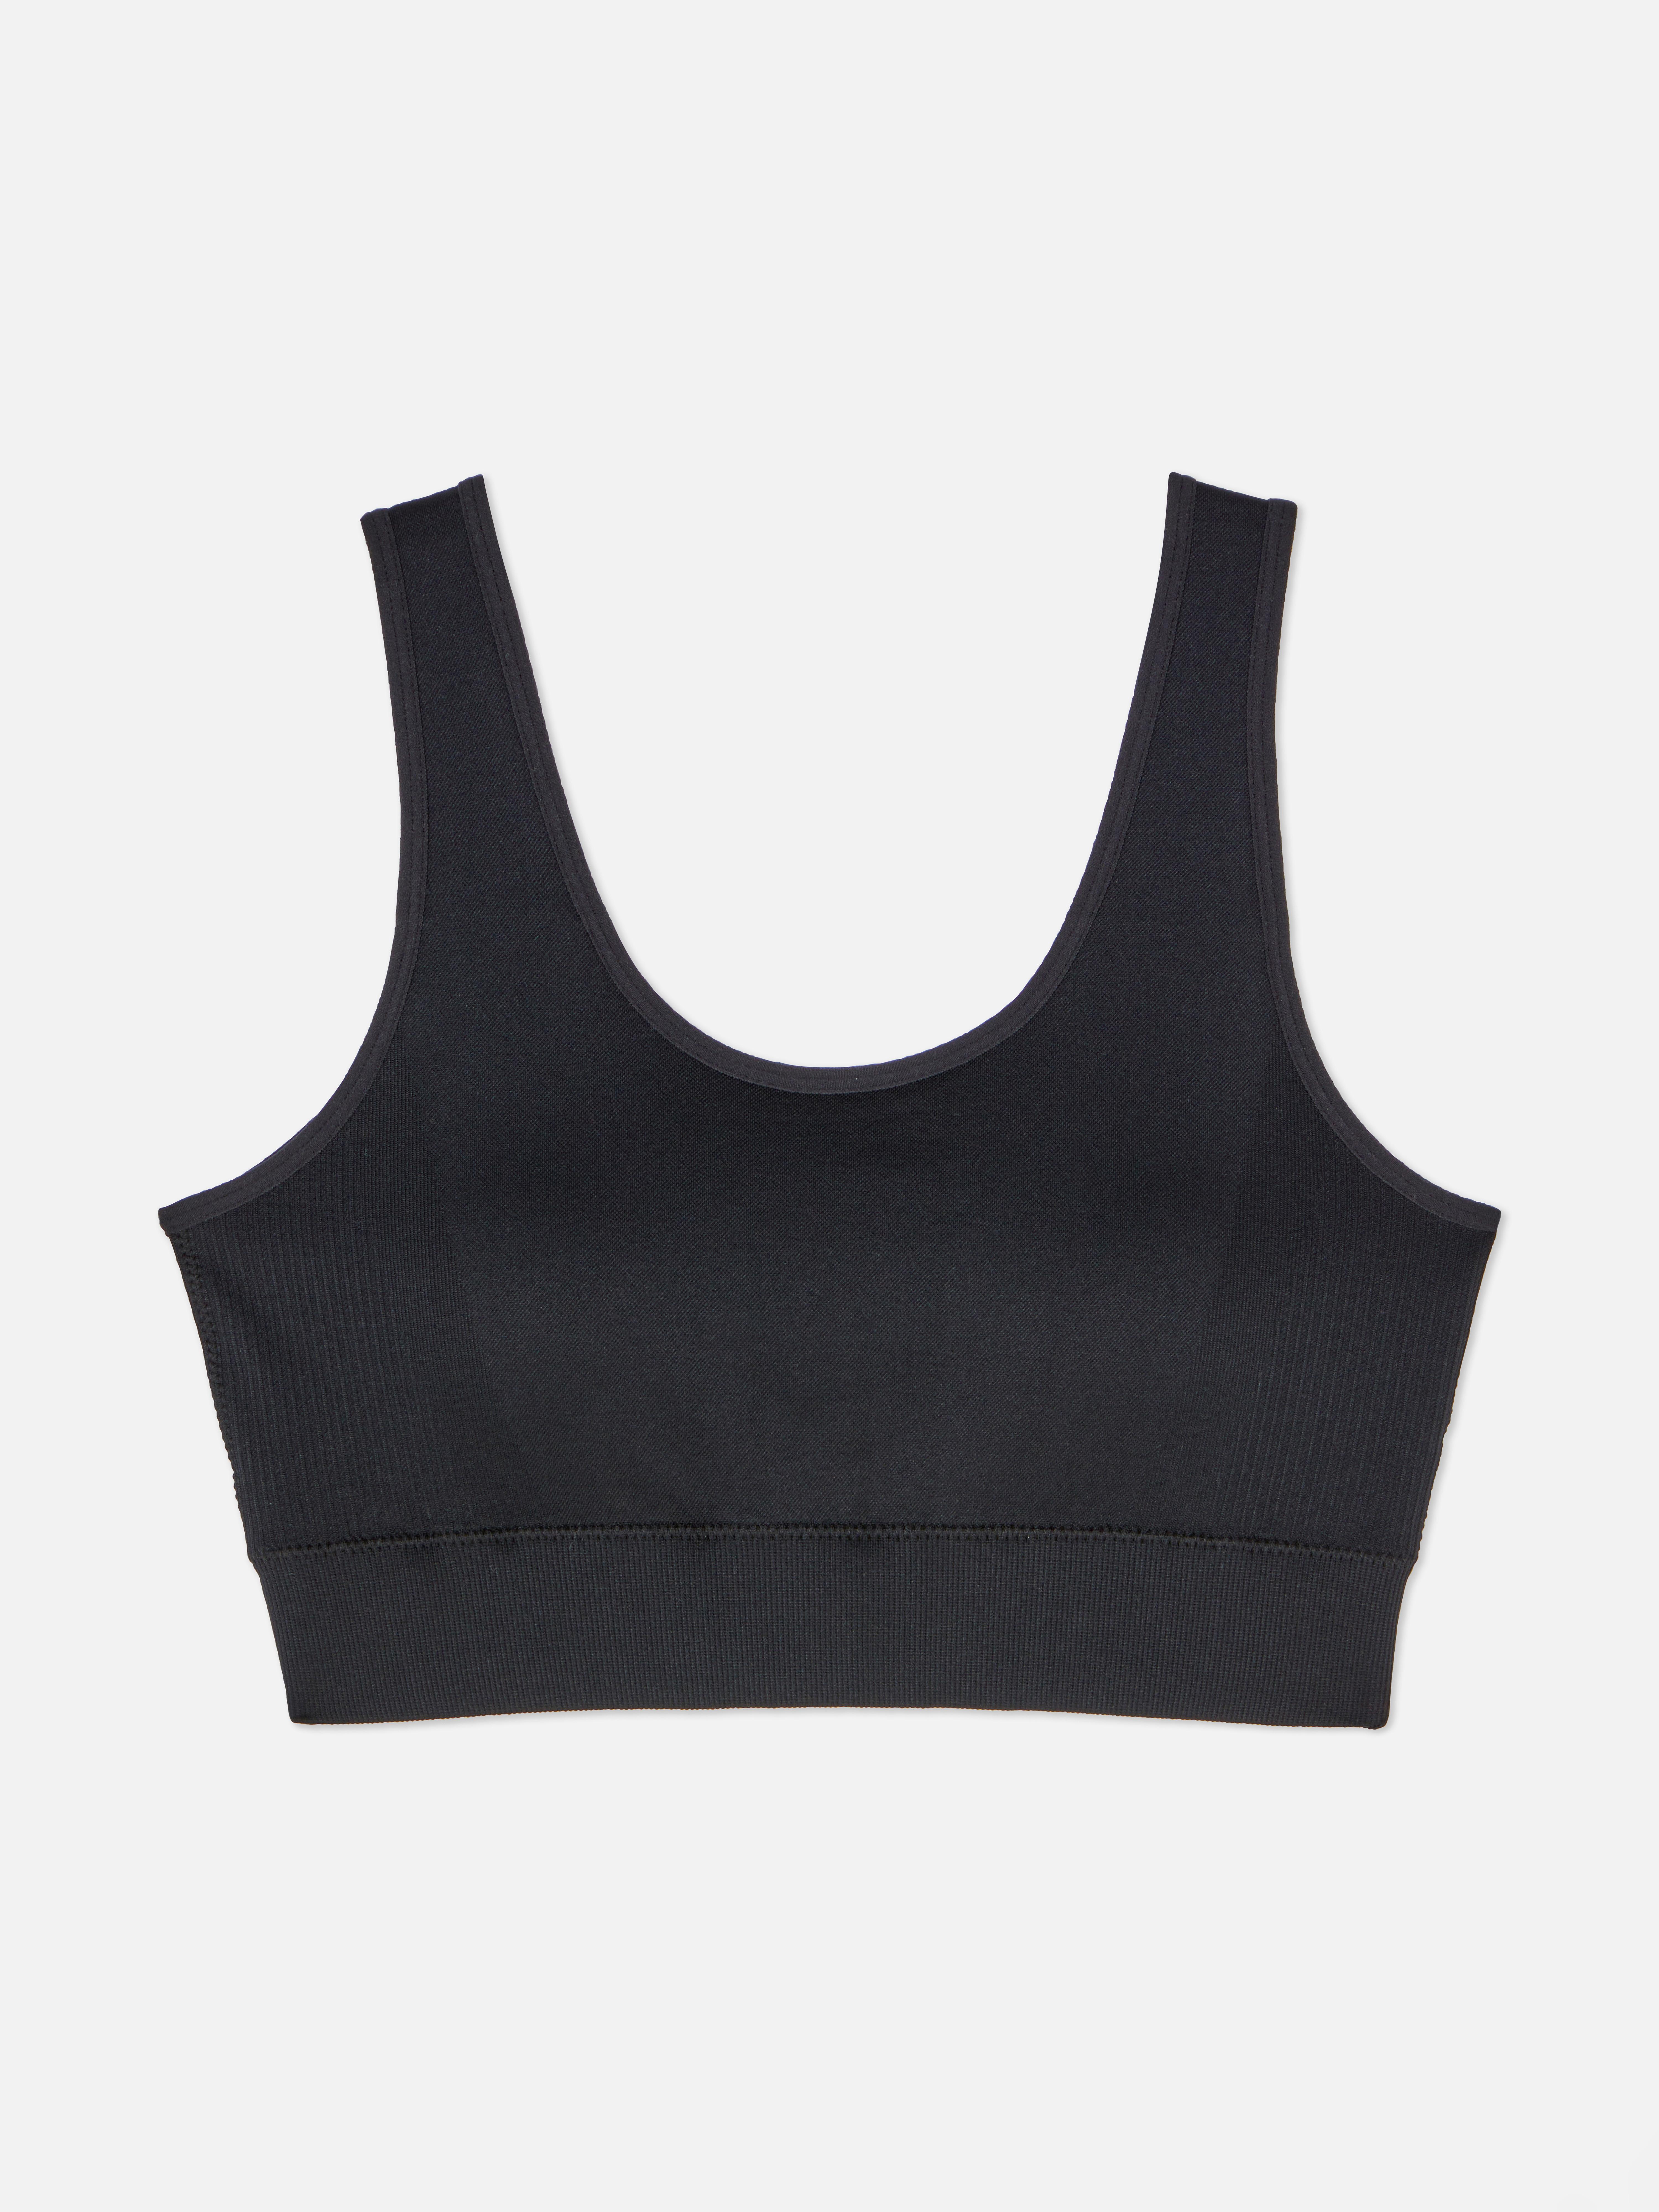 Simple cute black sports bra primark crop top no padding Size 8